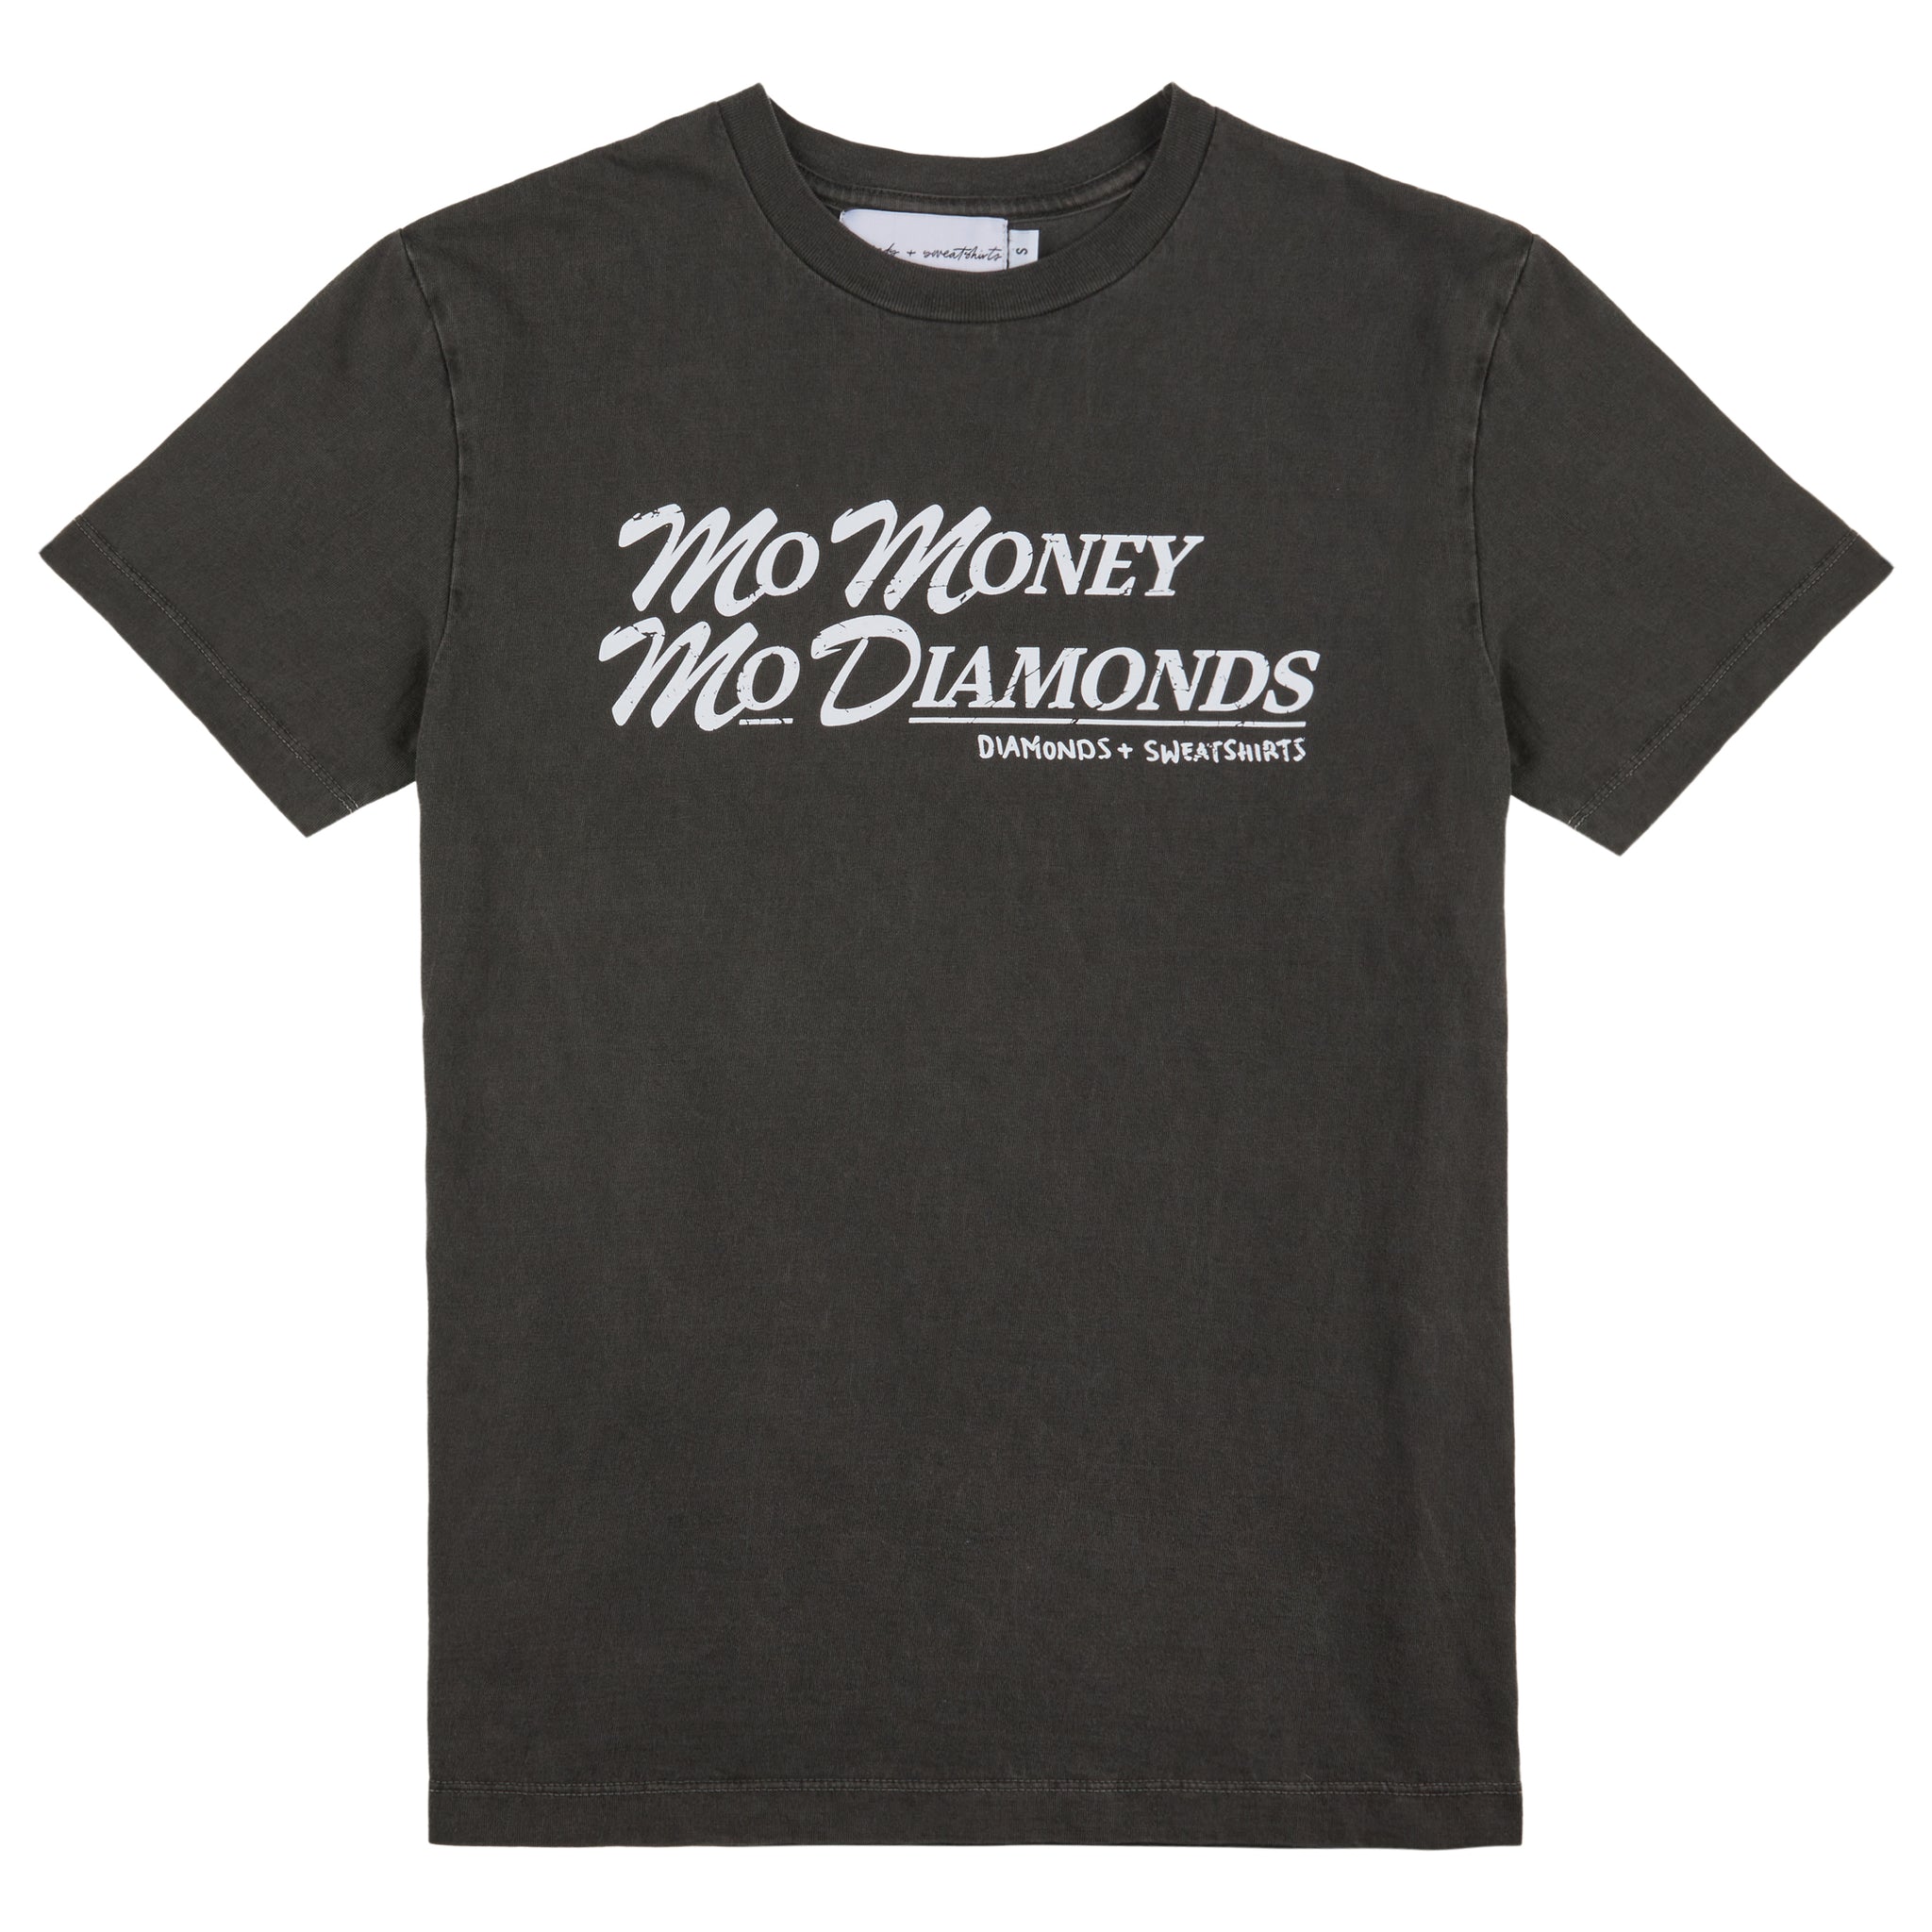 MO MONEY, MO DIAMONDS t-shirt